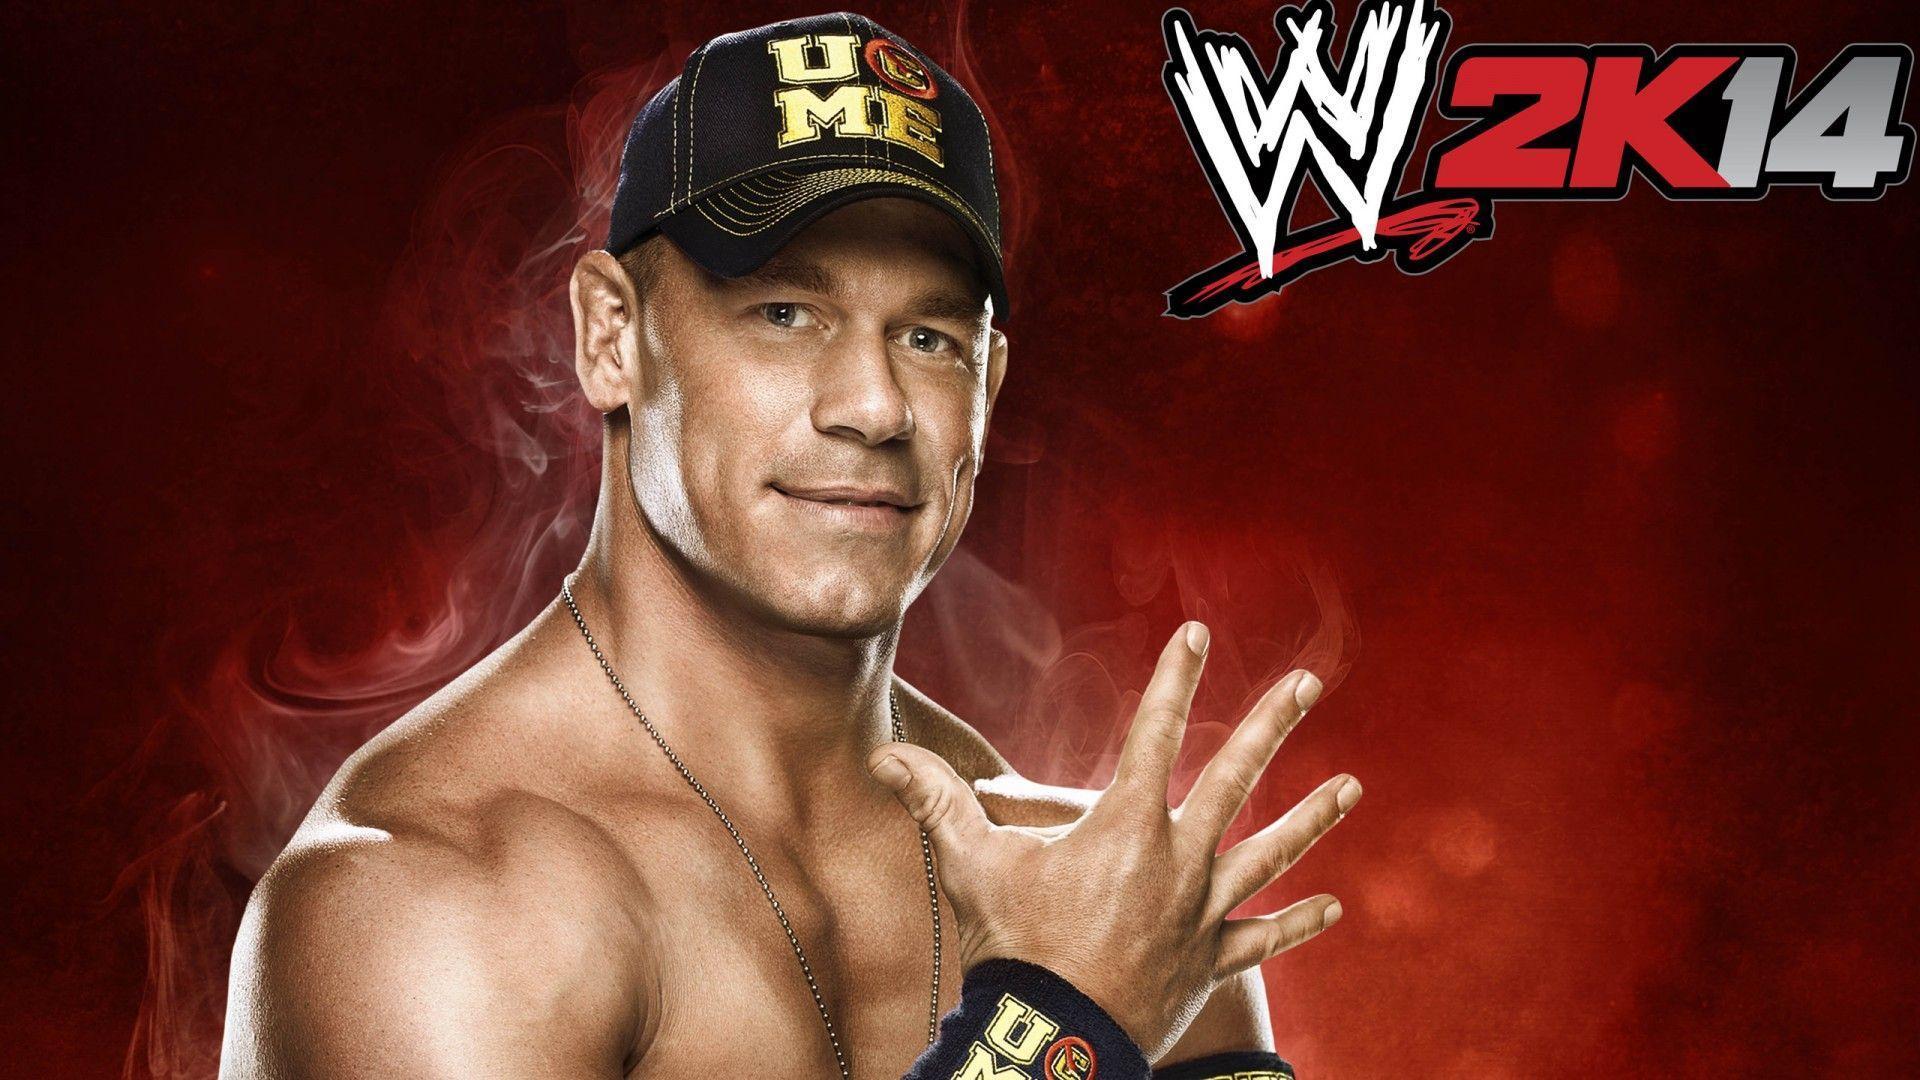 John Cena WWE 2K14 Wallpaper